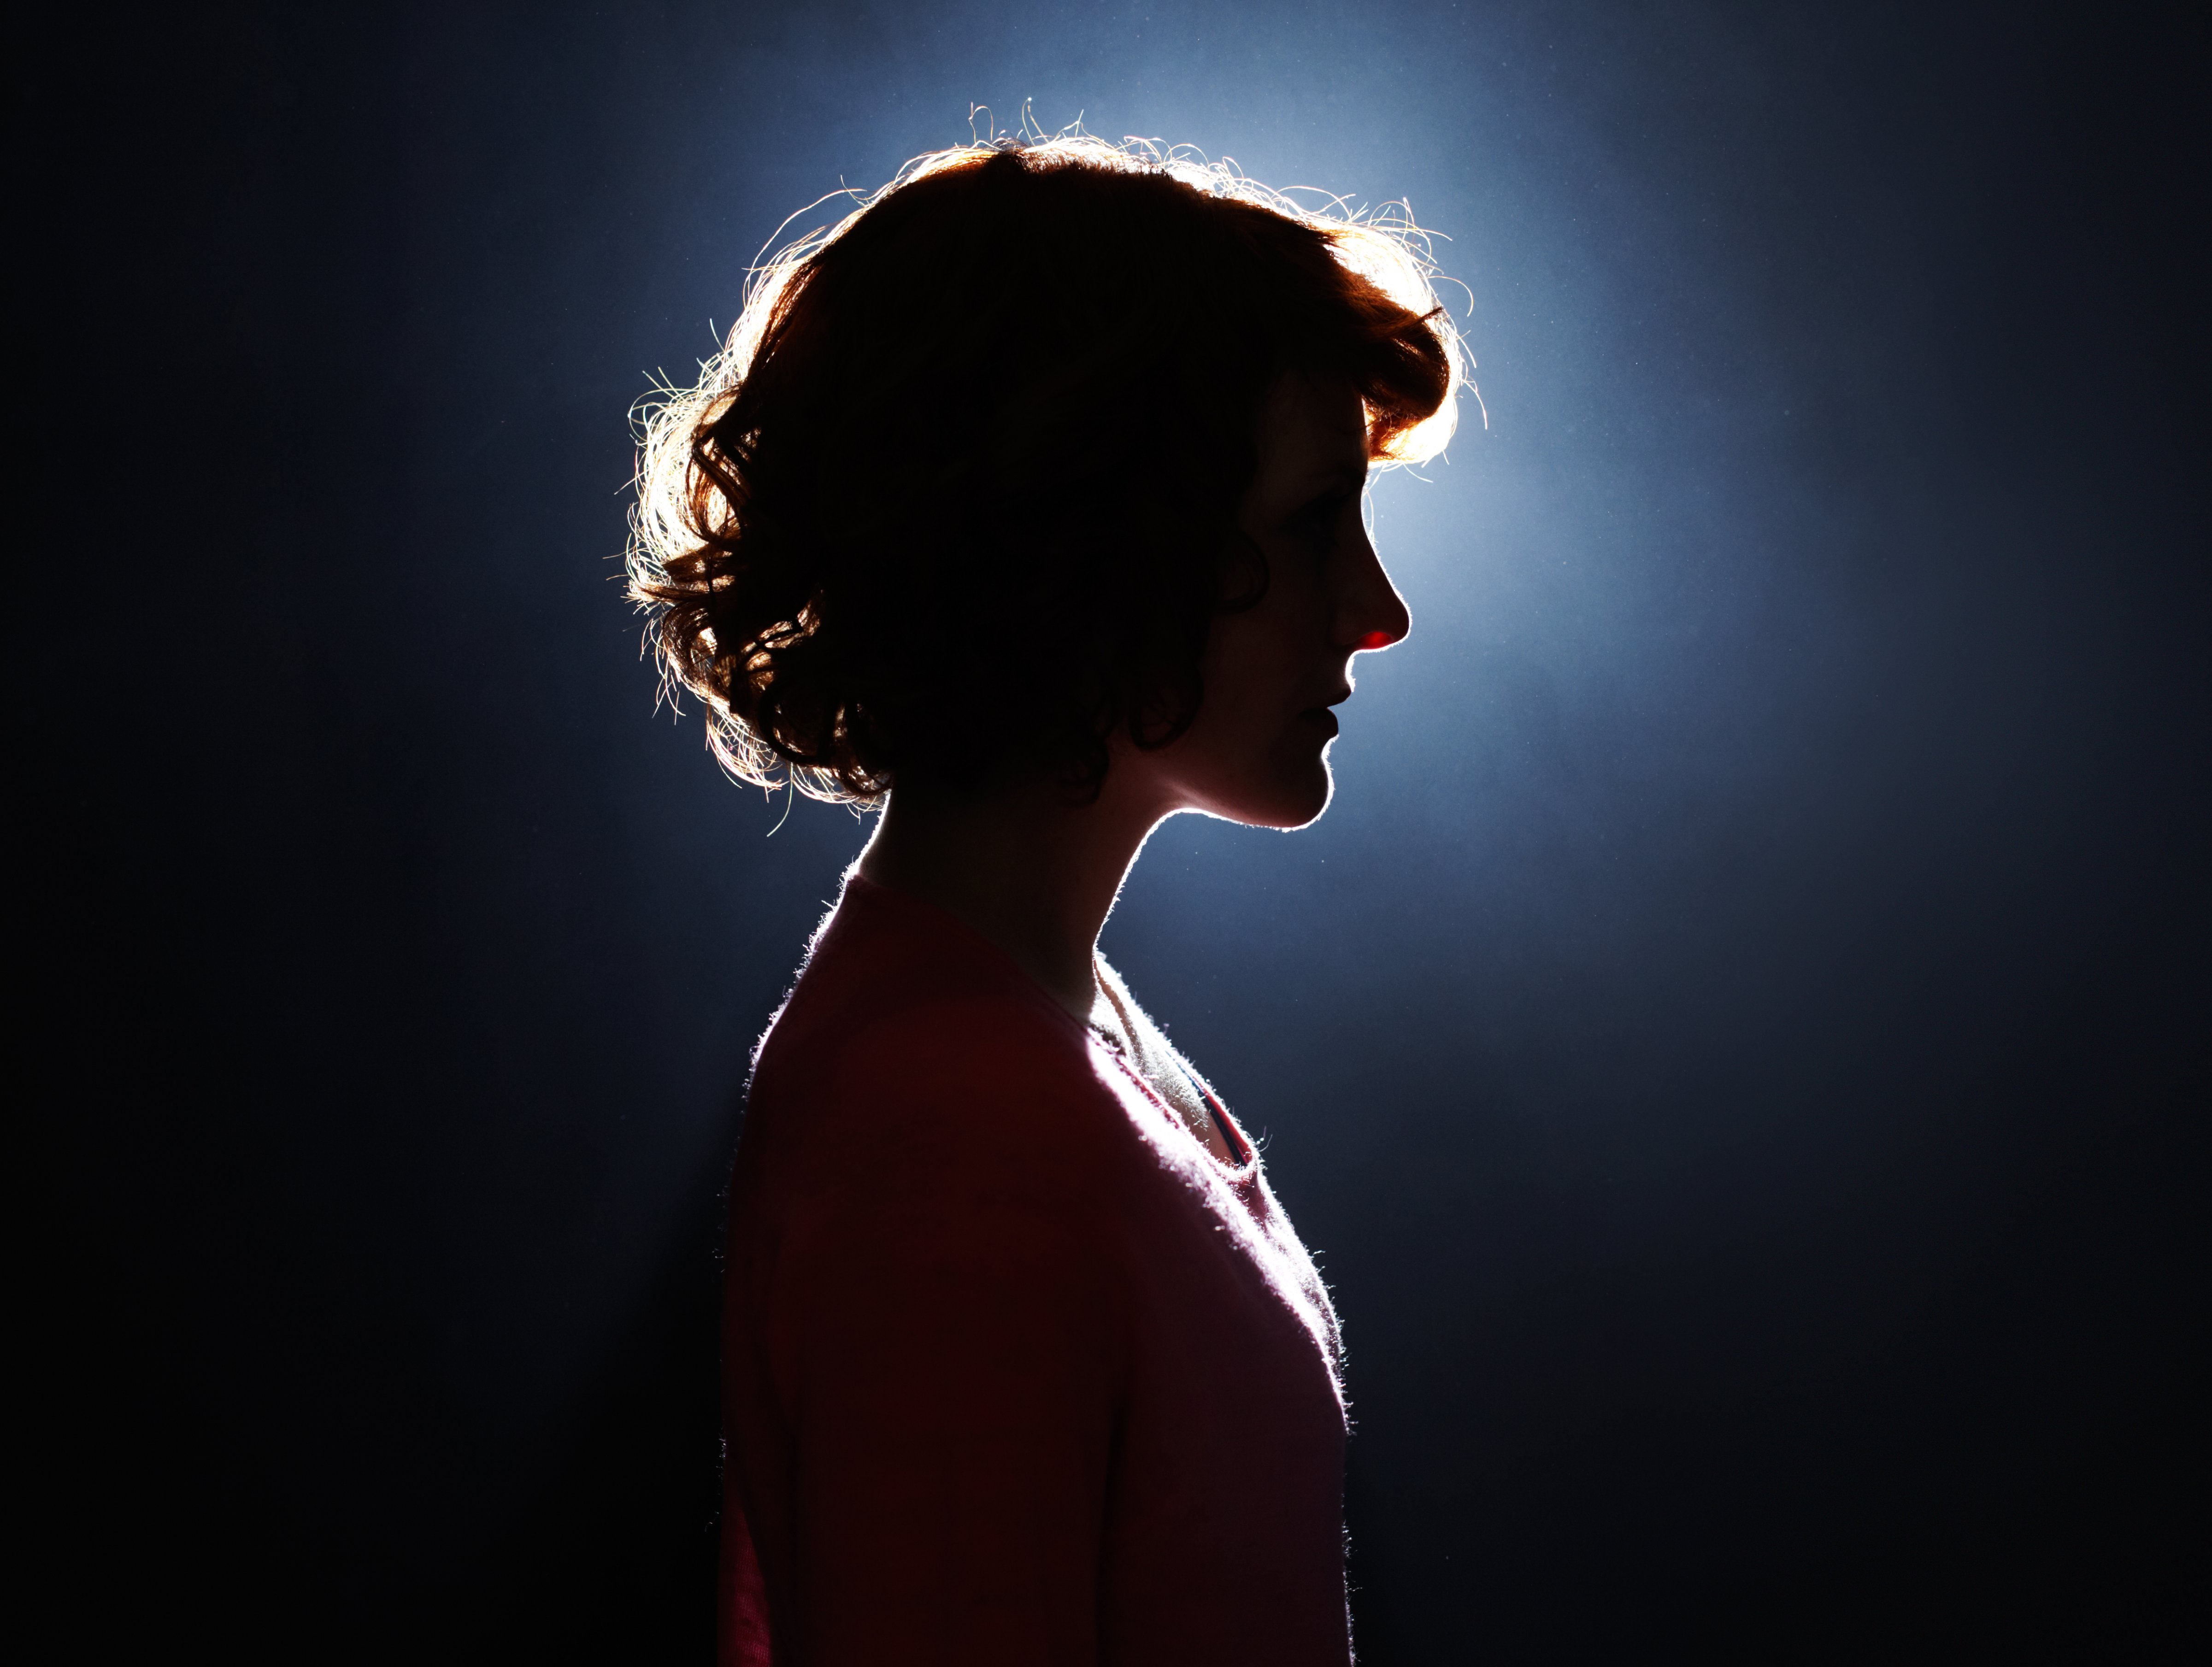 woman-profile-silhouette